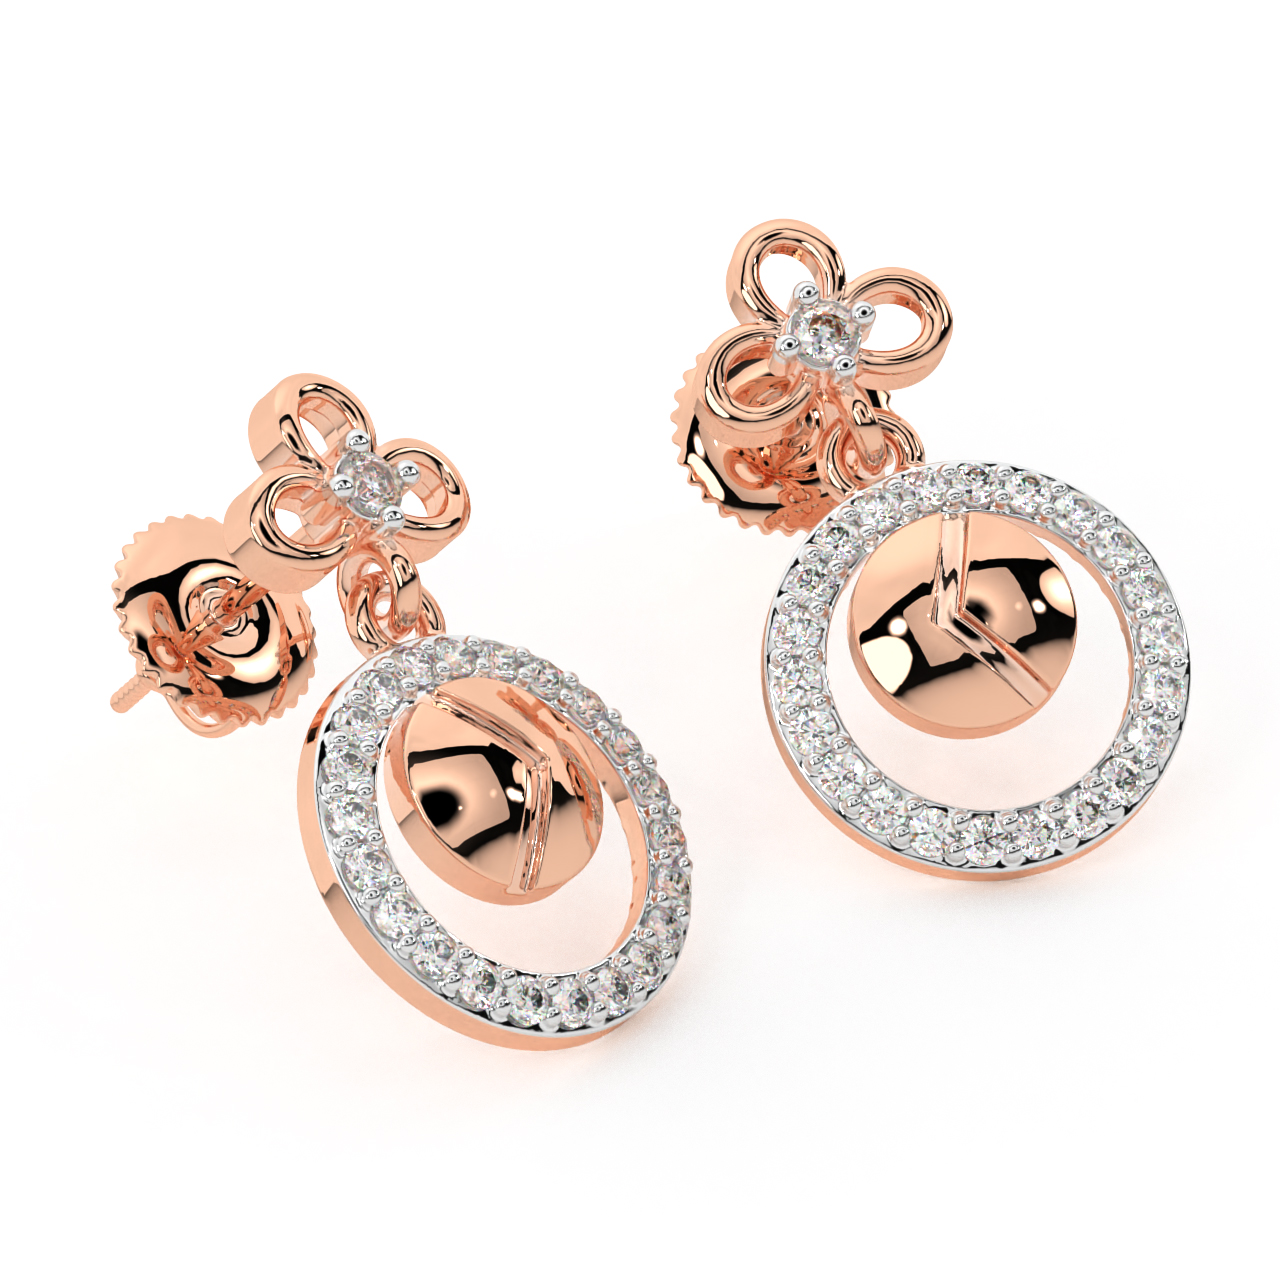 The Ring Ray Diamond Earrings